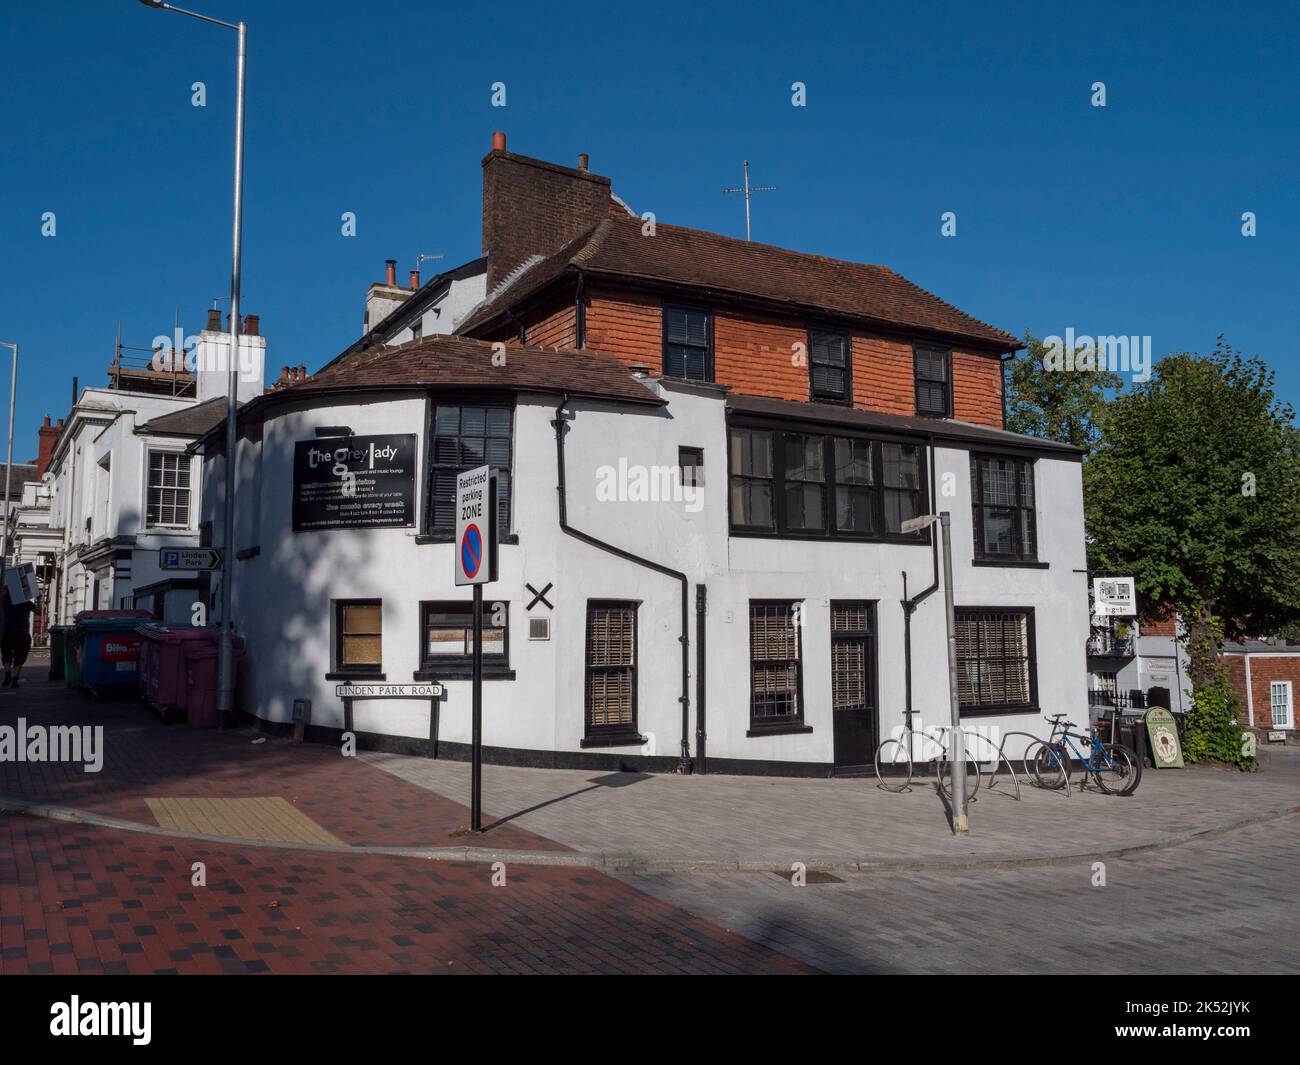 The Grey Lady music lounge/bar in the Pantiles area of Royal Tunbridge Wells, Kent, UK. Stock Photo